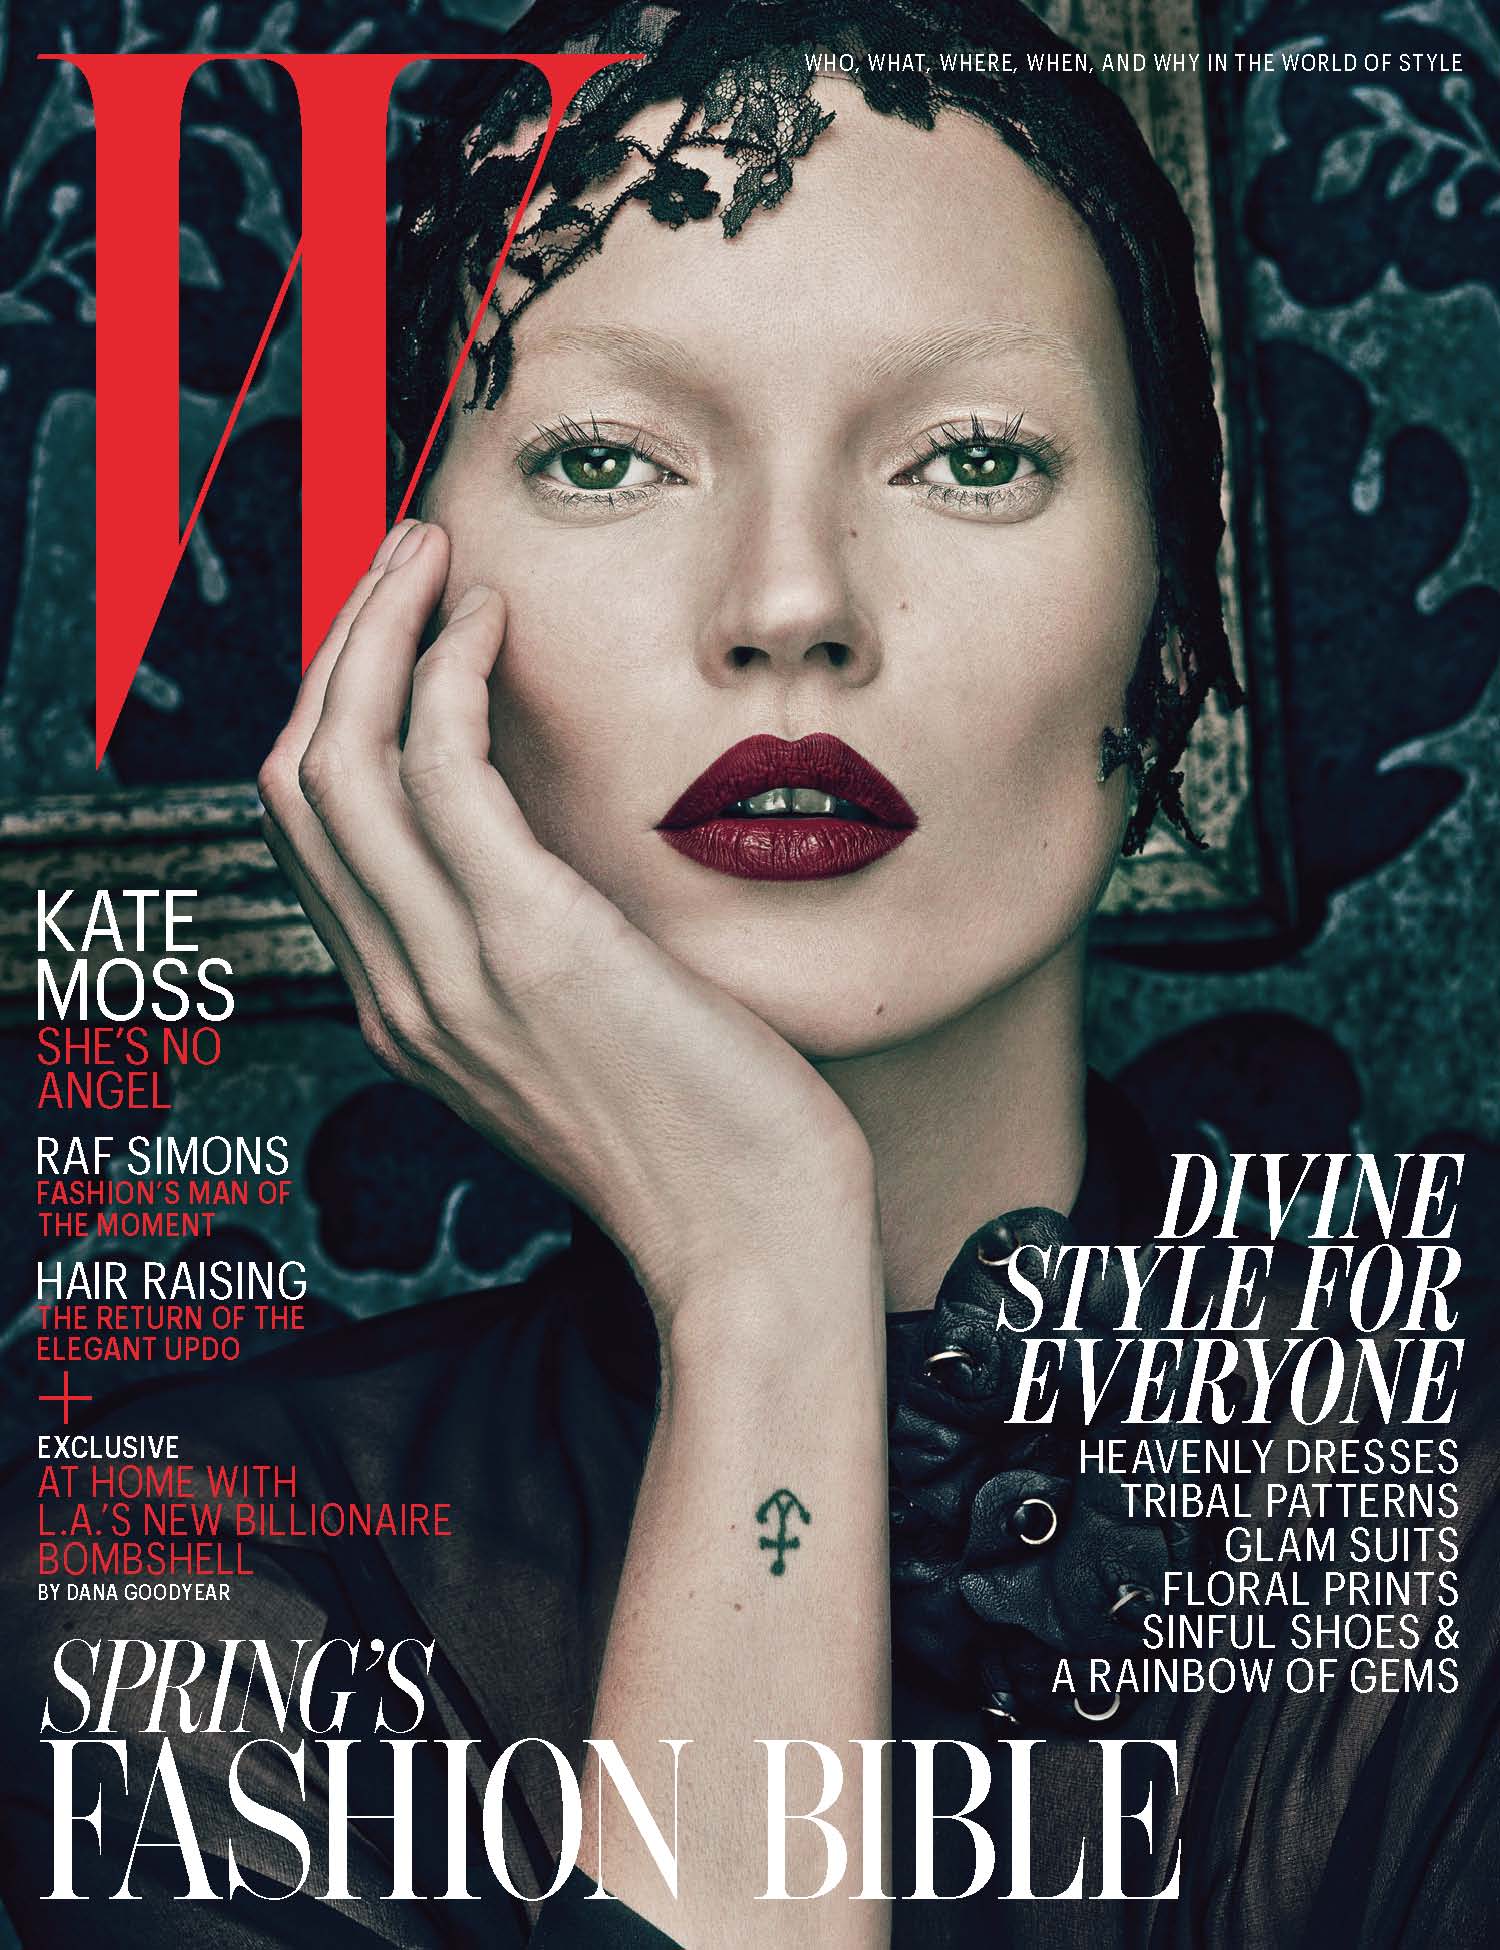 W Magazine-March 2012: "Kate Moss"